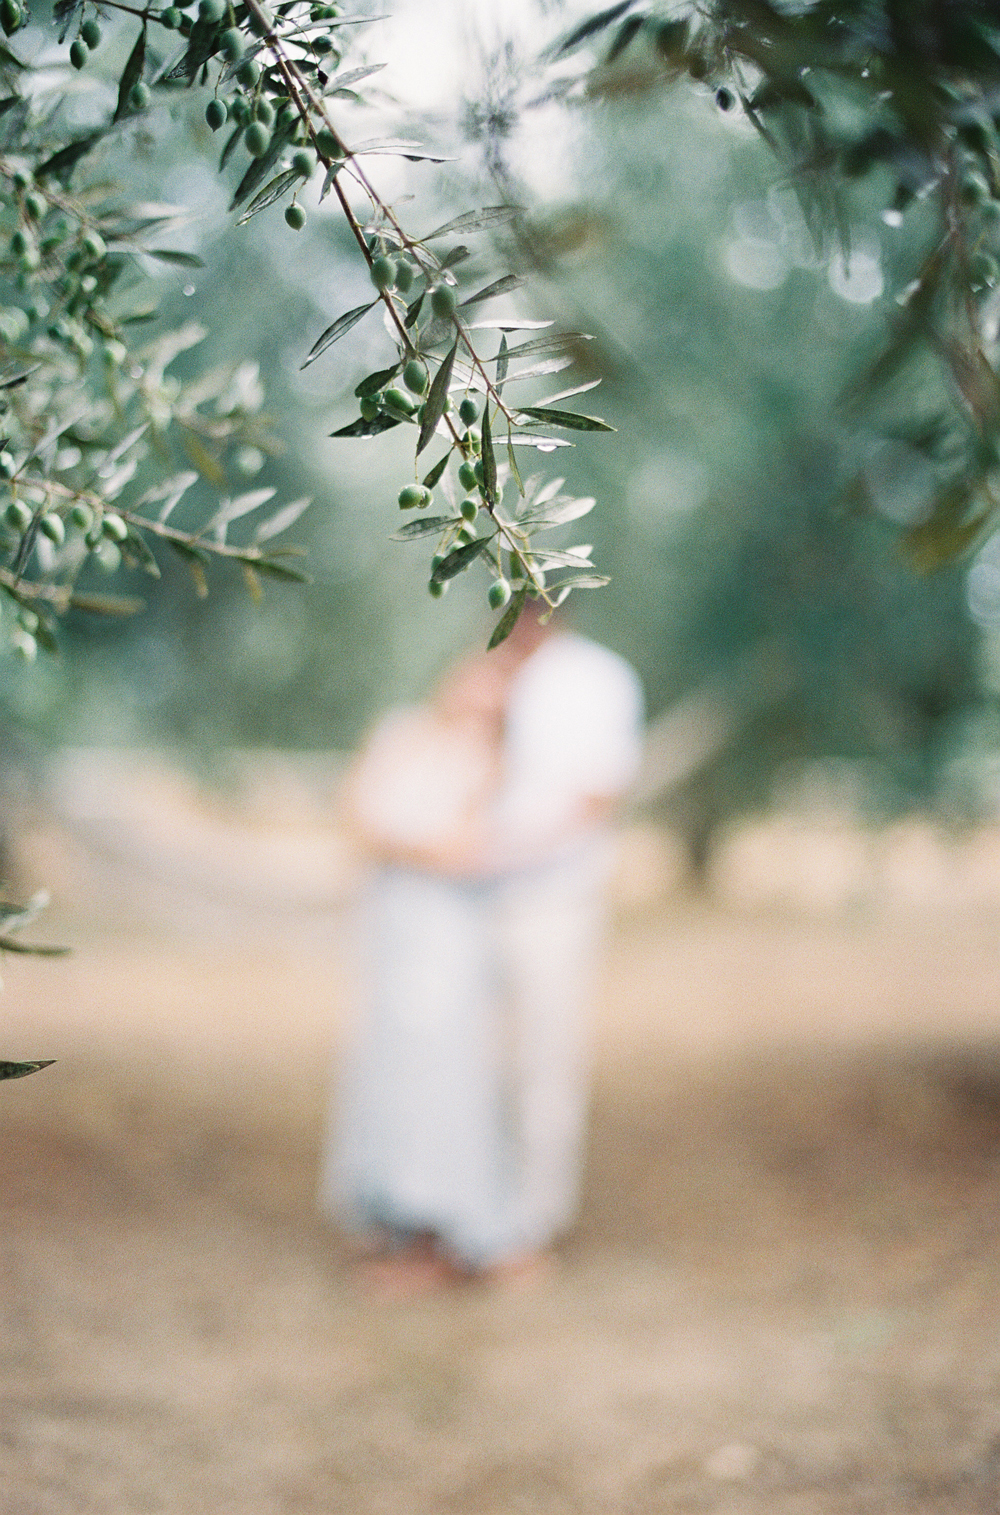 Simple Engagement Session in an Olive Grove | Les Anagnou destination film wedding photographer